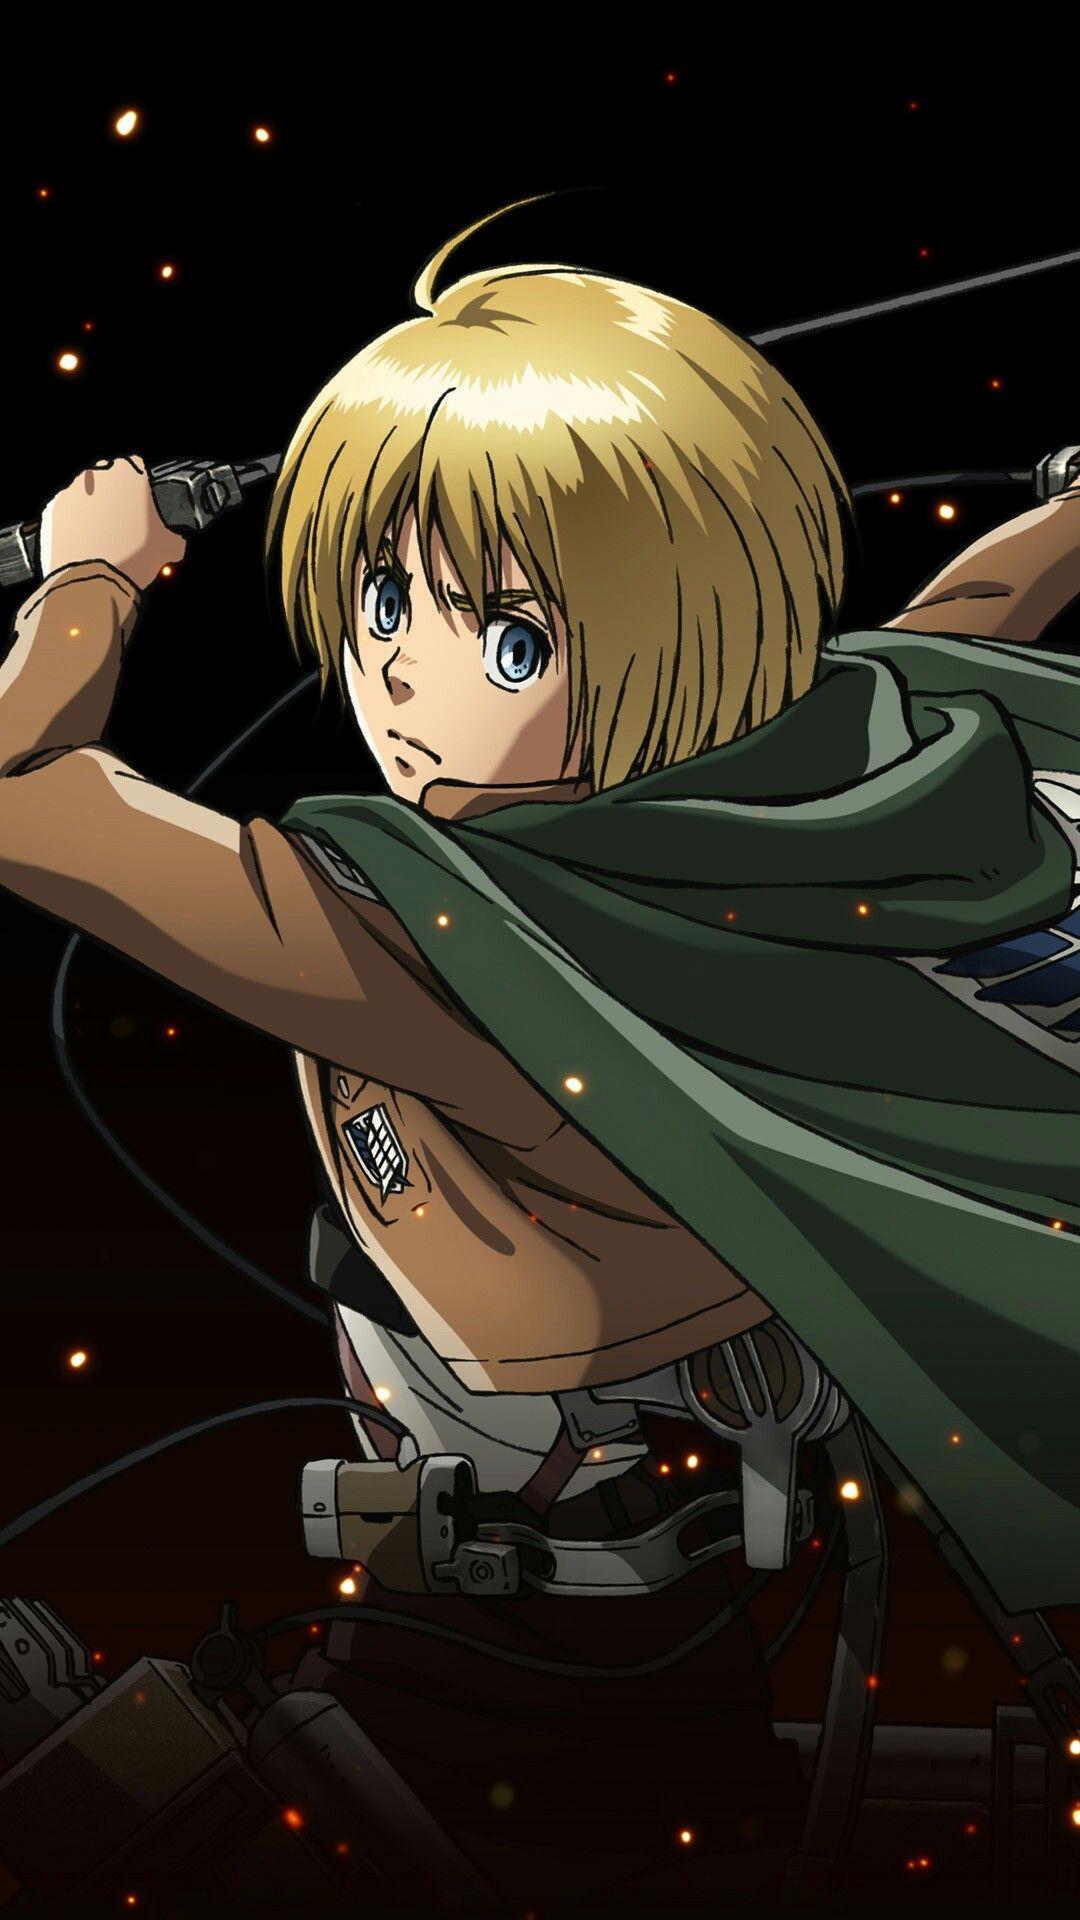 1080 x 1920 · jpeg - Attack On Titan Wallpaper Armin - Anime Daily Wallpaper